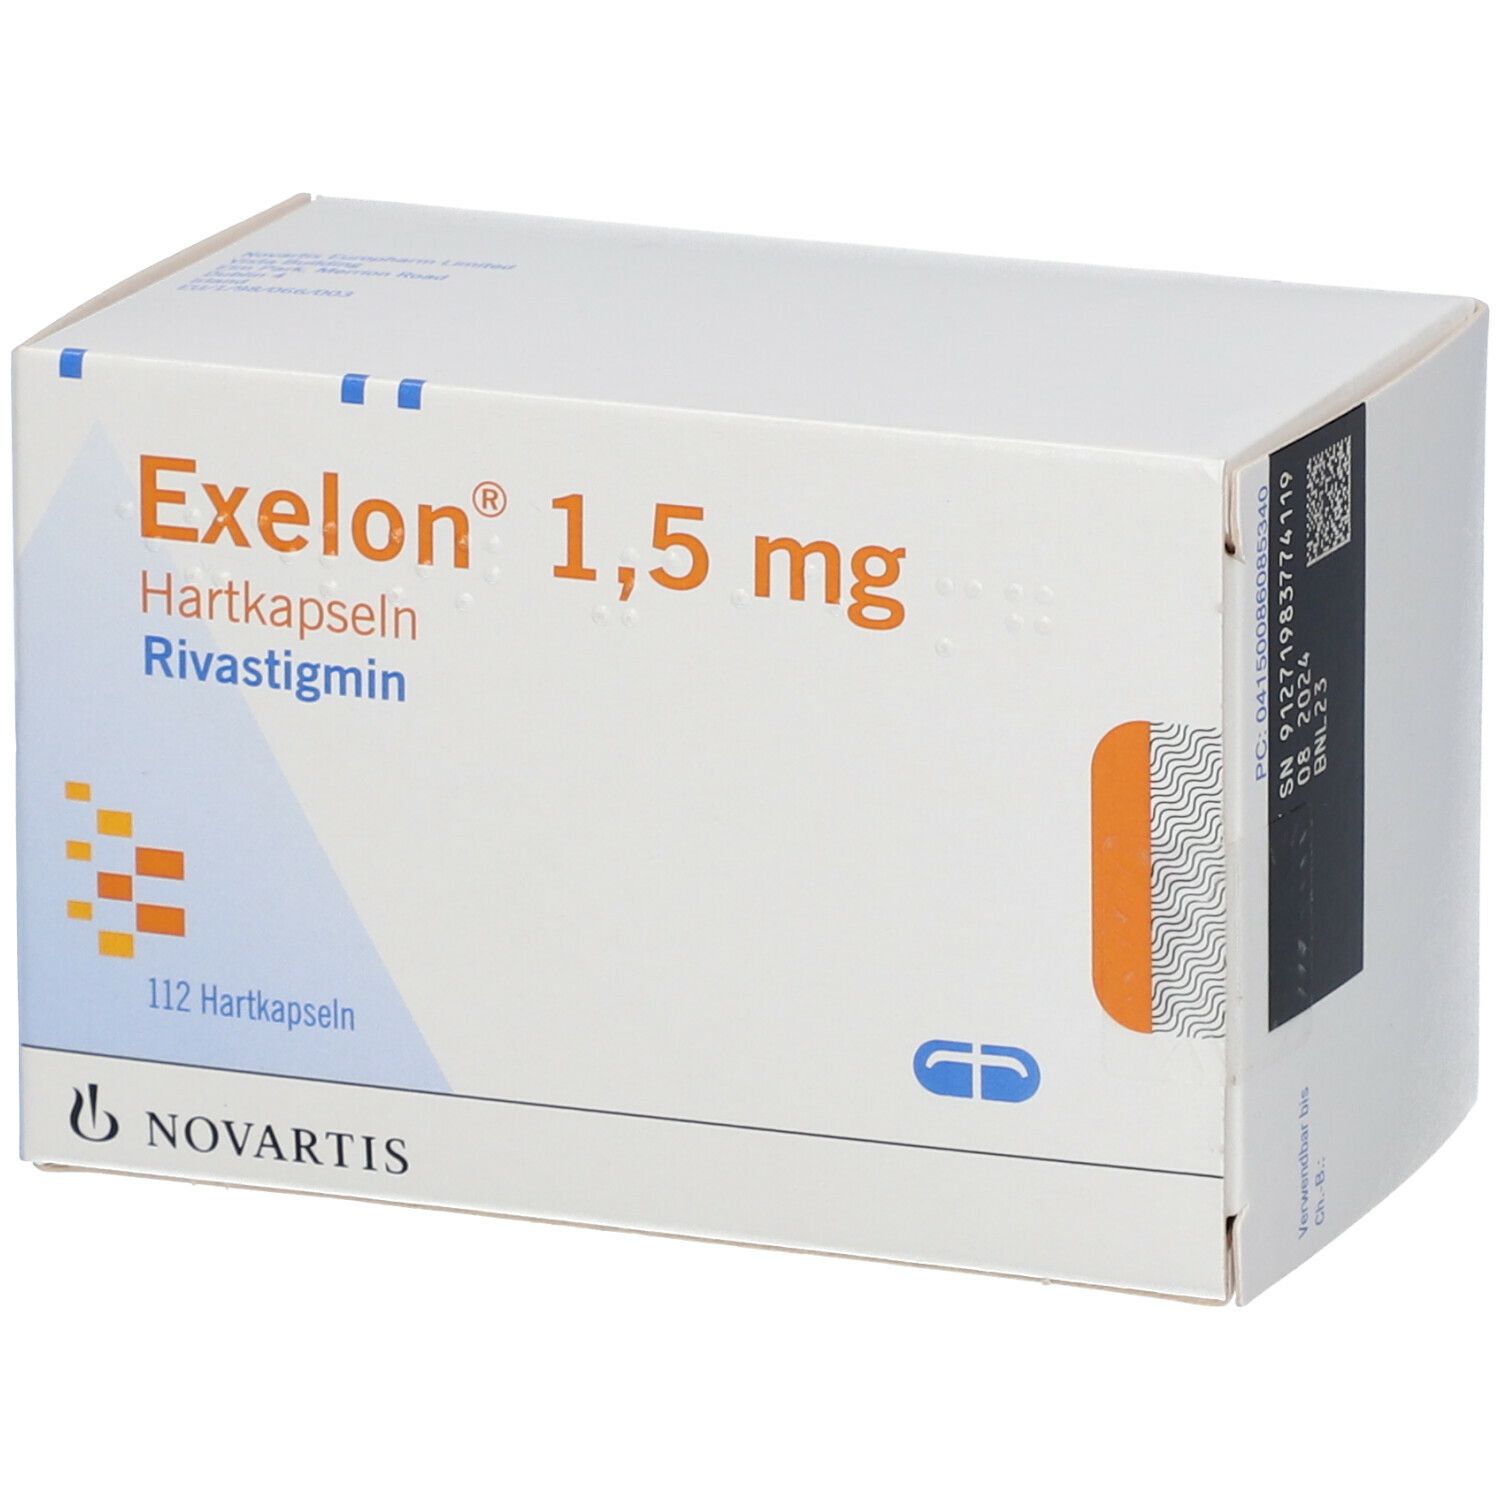 Exelon® 1,5 mg